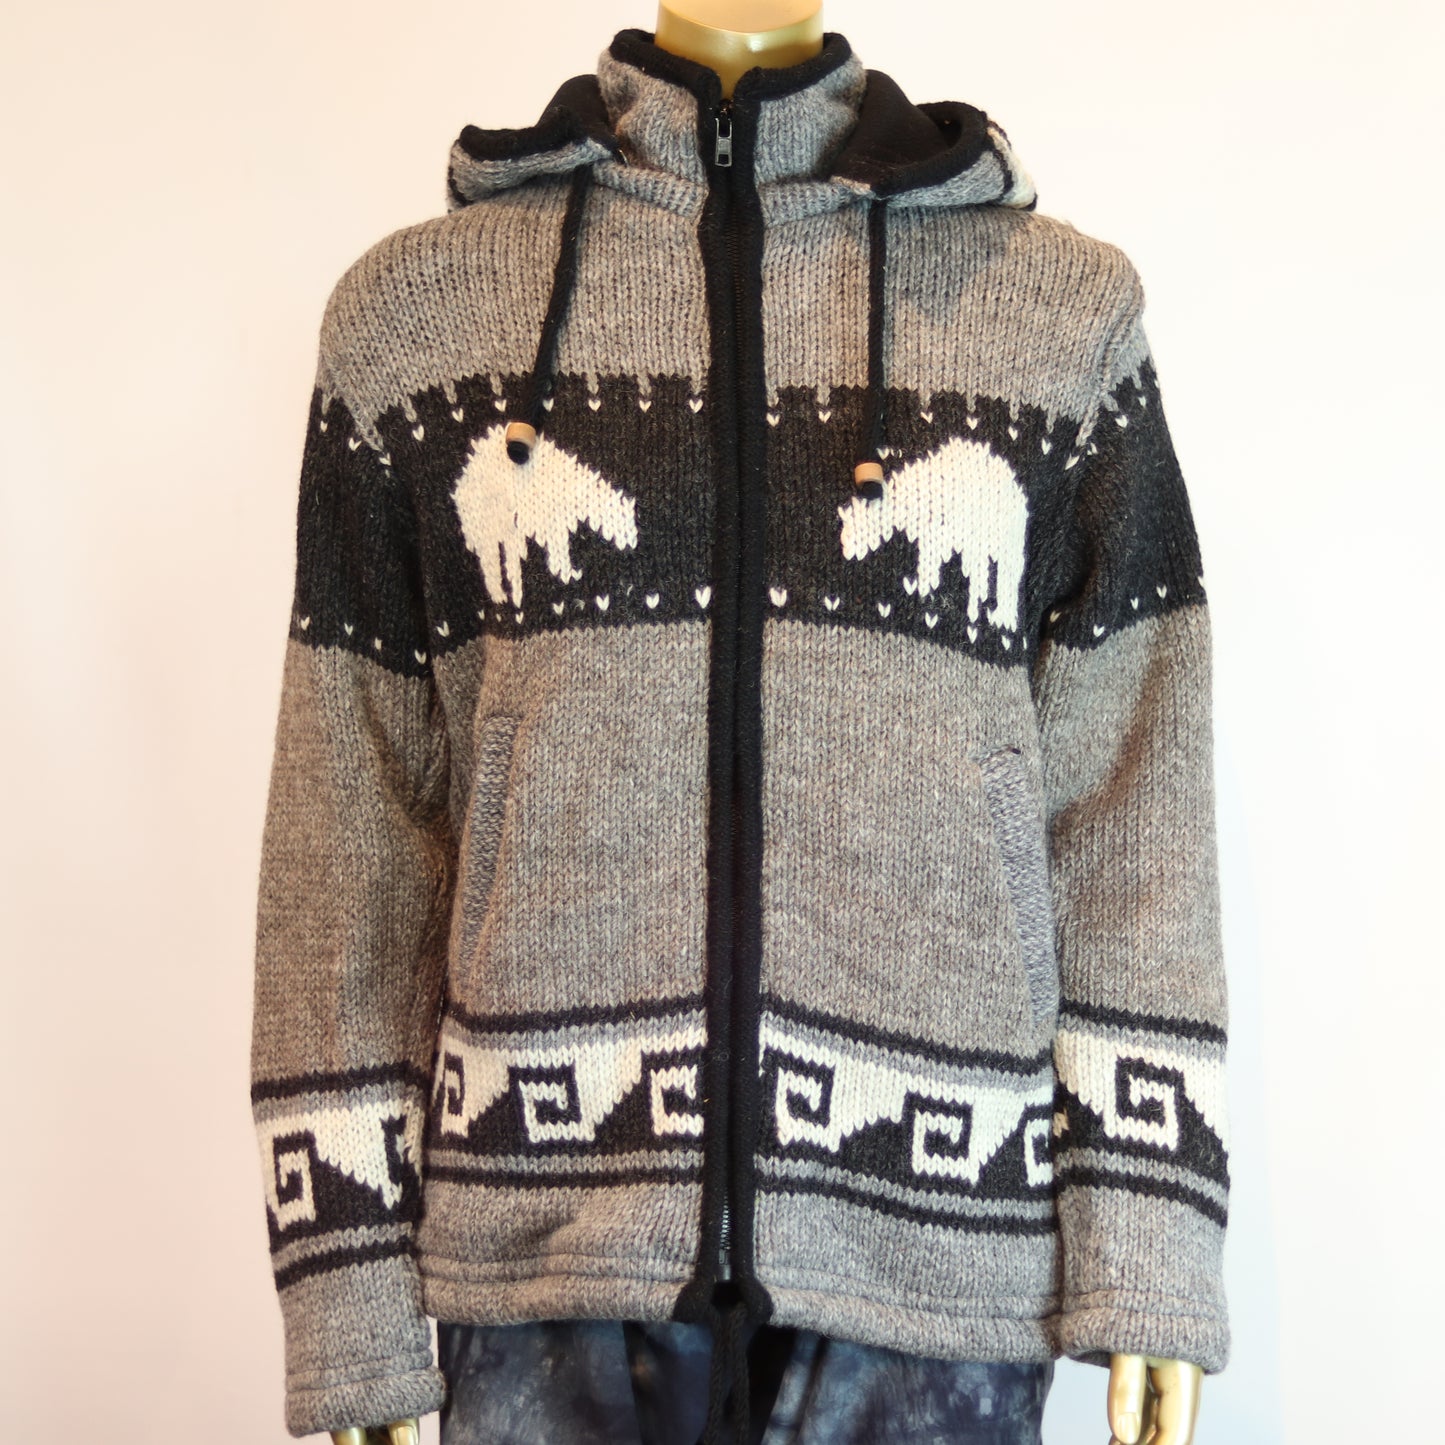 Everest Northern Polar Bear 100% Wool Jacket with Fleece Lining